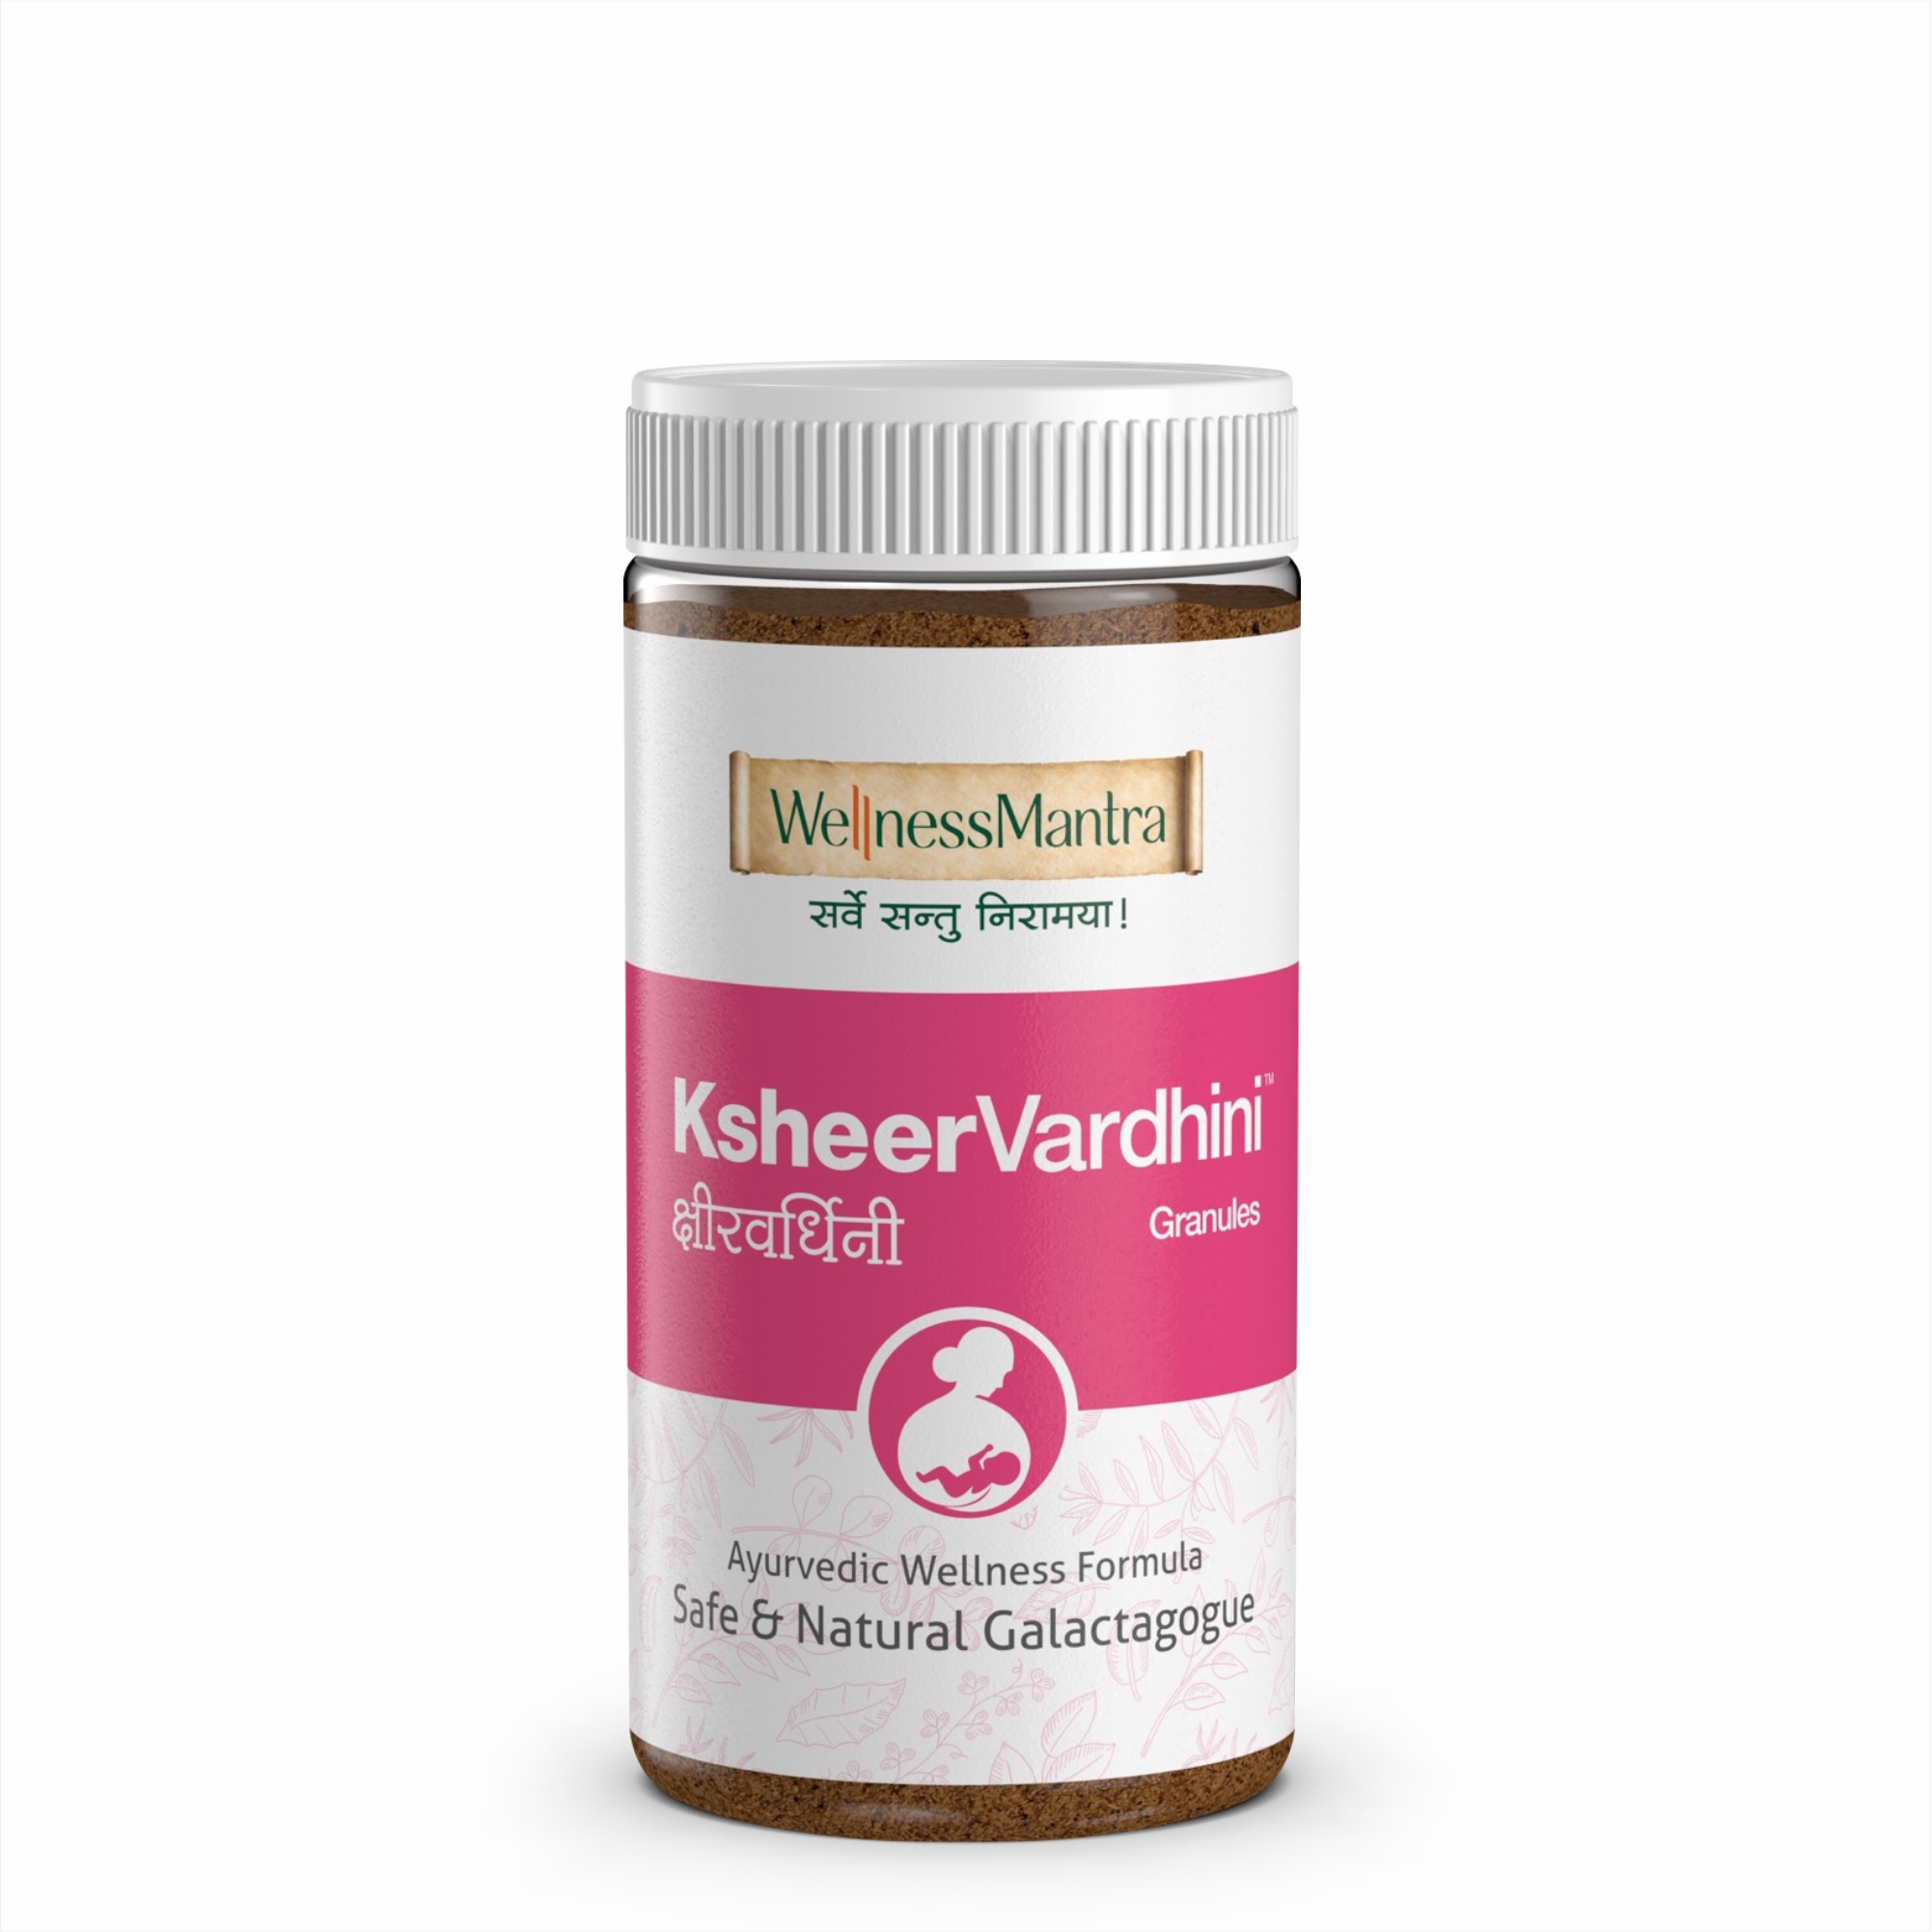 Buy Wellness Mantra KsheerVardhini Granules at Best Price Online